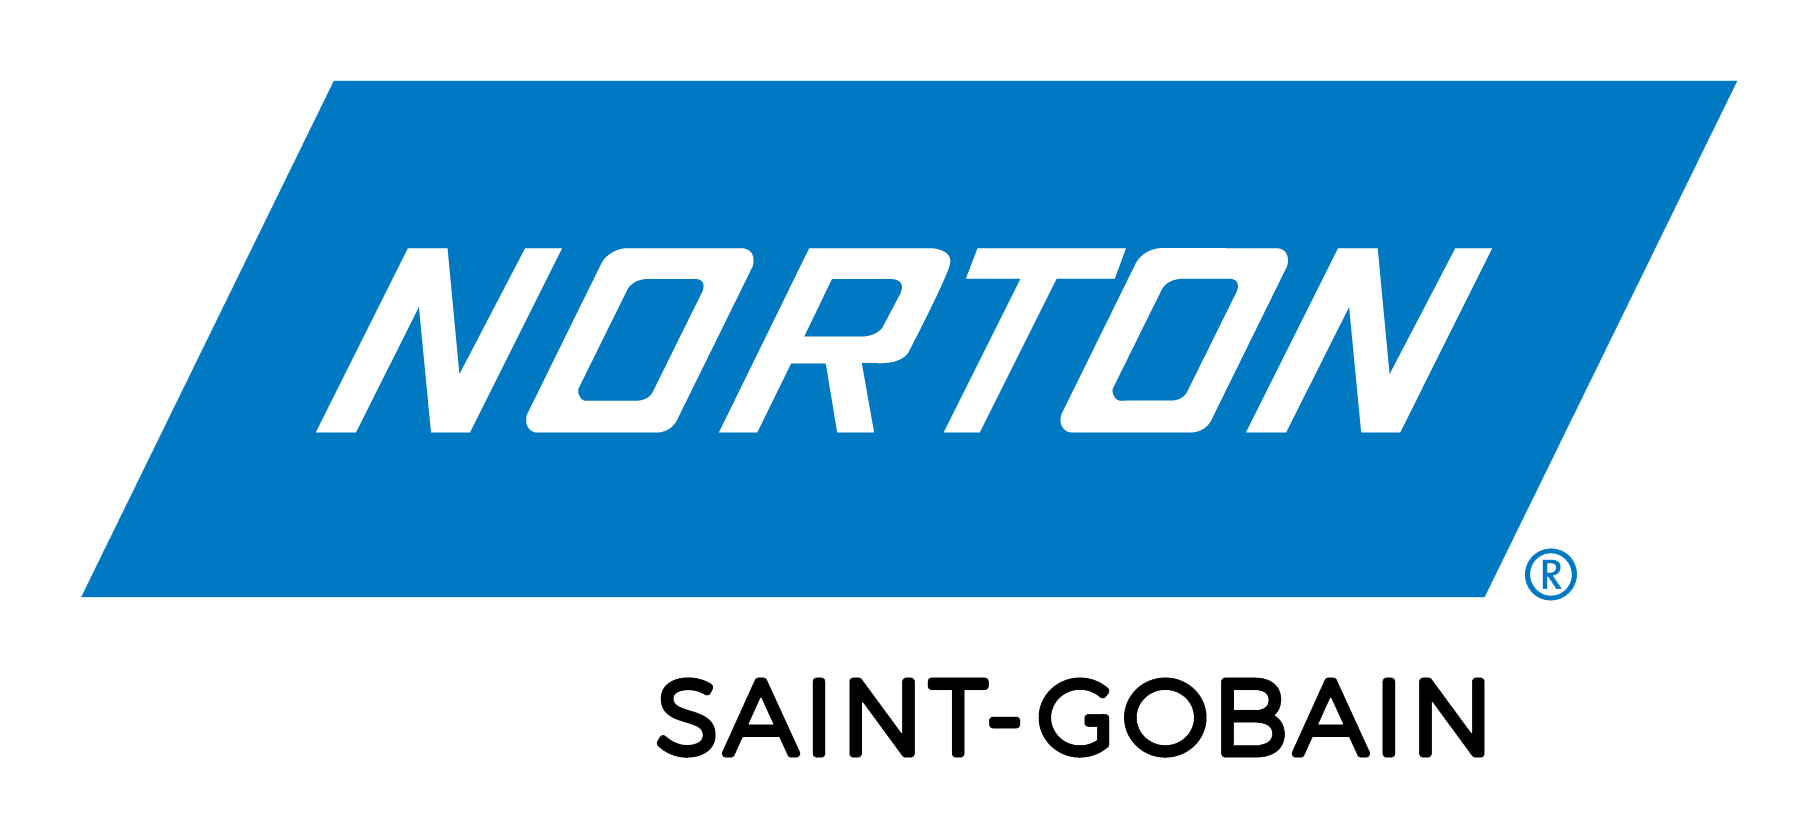 norton saint gobain logo